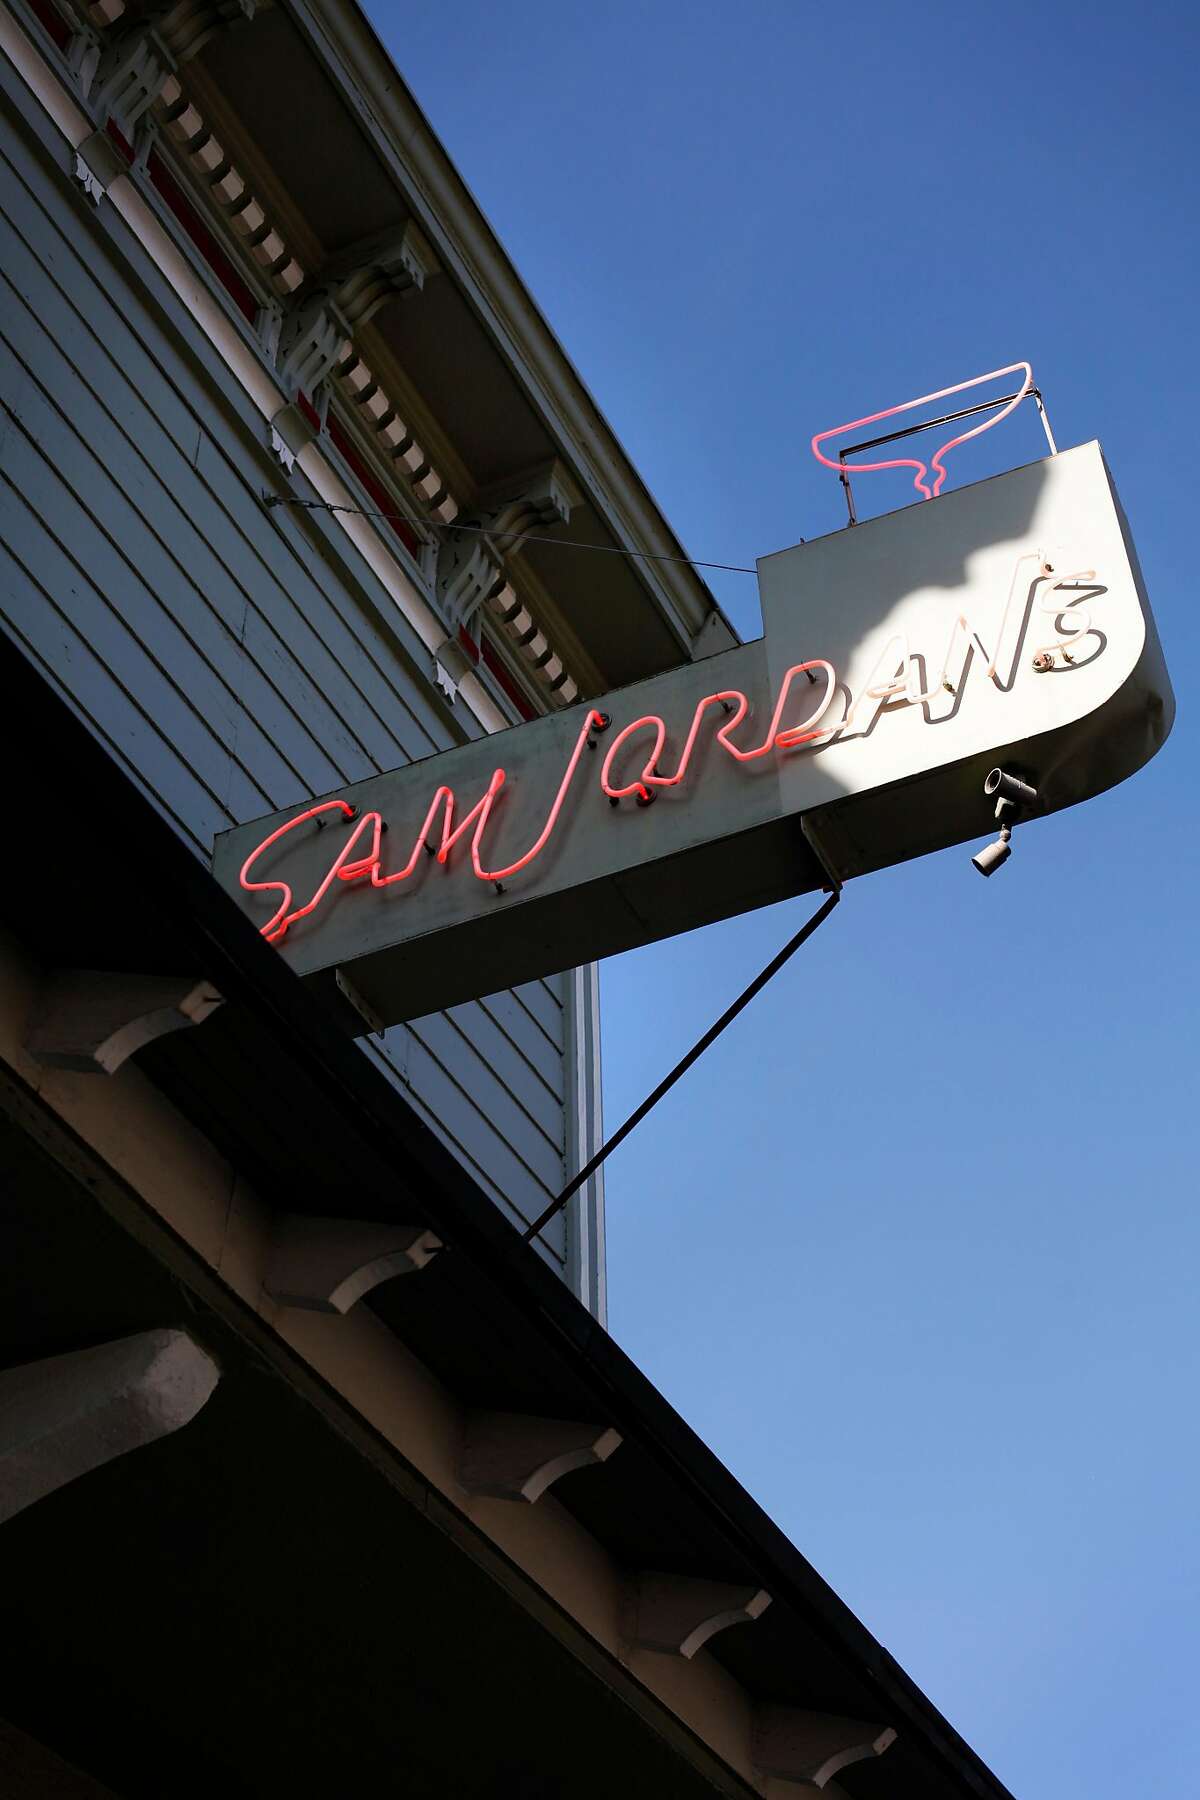 Sam Jordan's Bar is shown in San Francisco, Calif., Monday, January 21, 2013. The bar recently obtained landmark status.